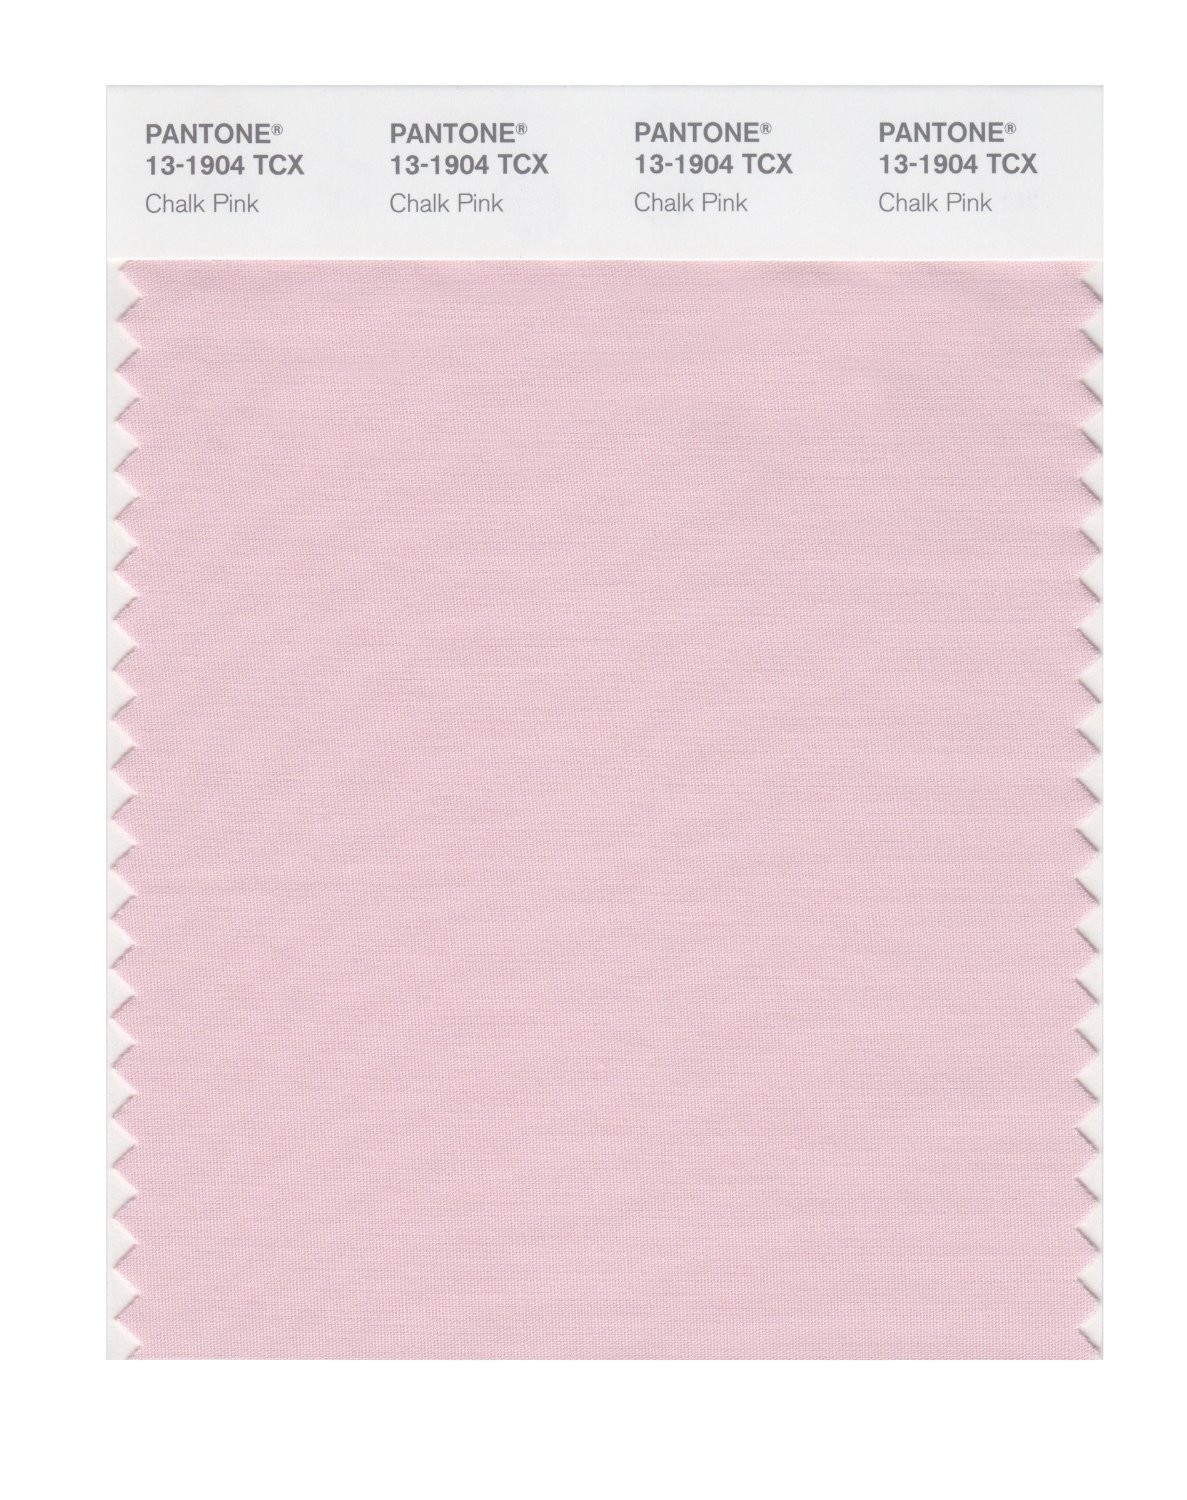 BUY Pantone Cotton Swatch 13-1904 Chalk Pink